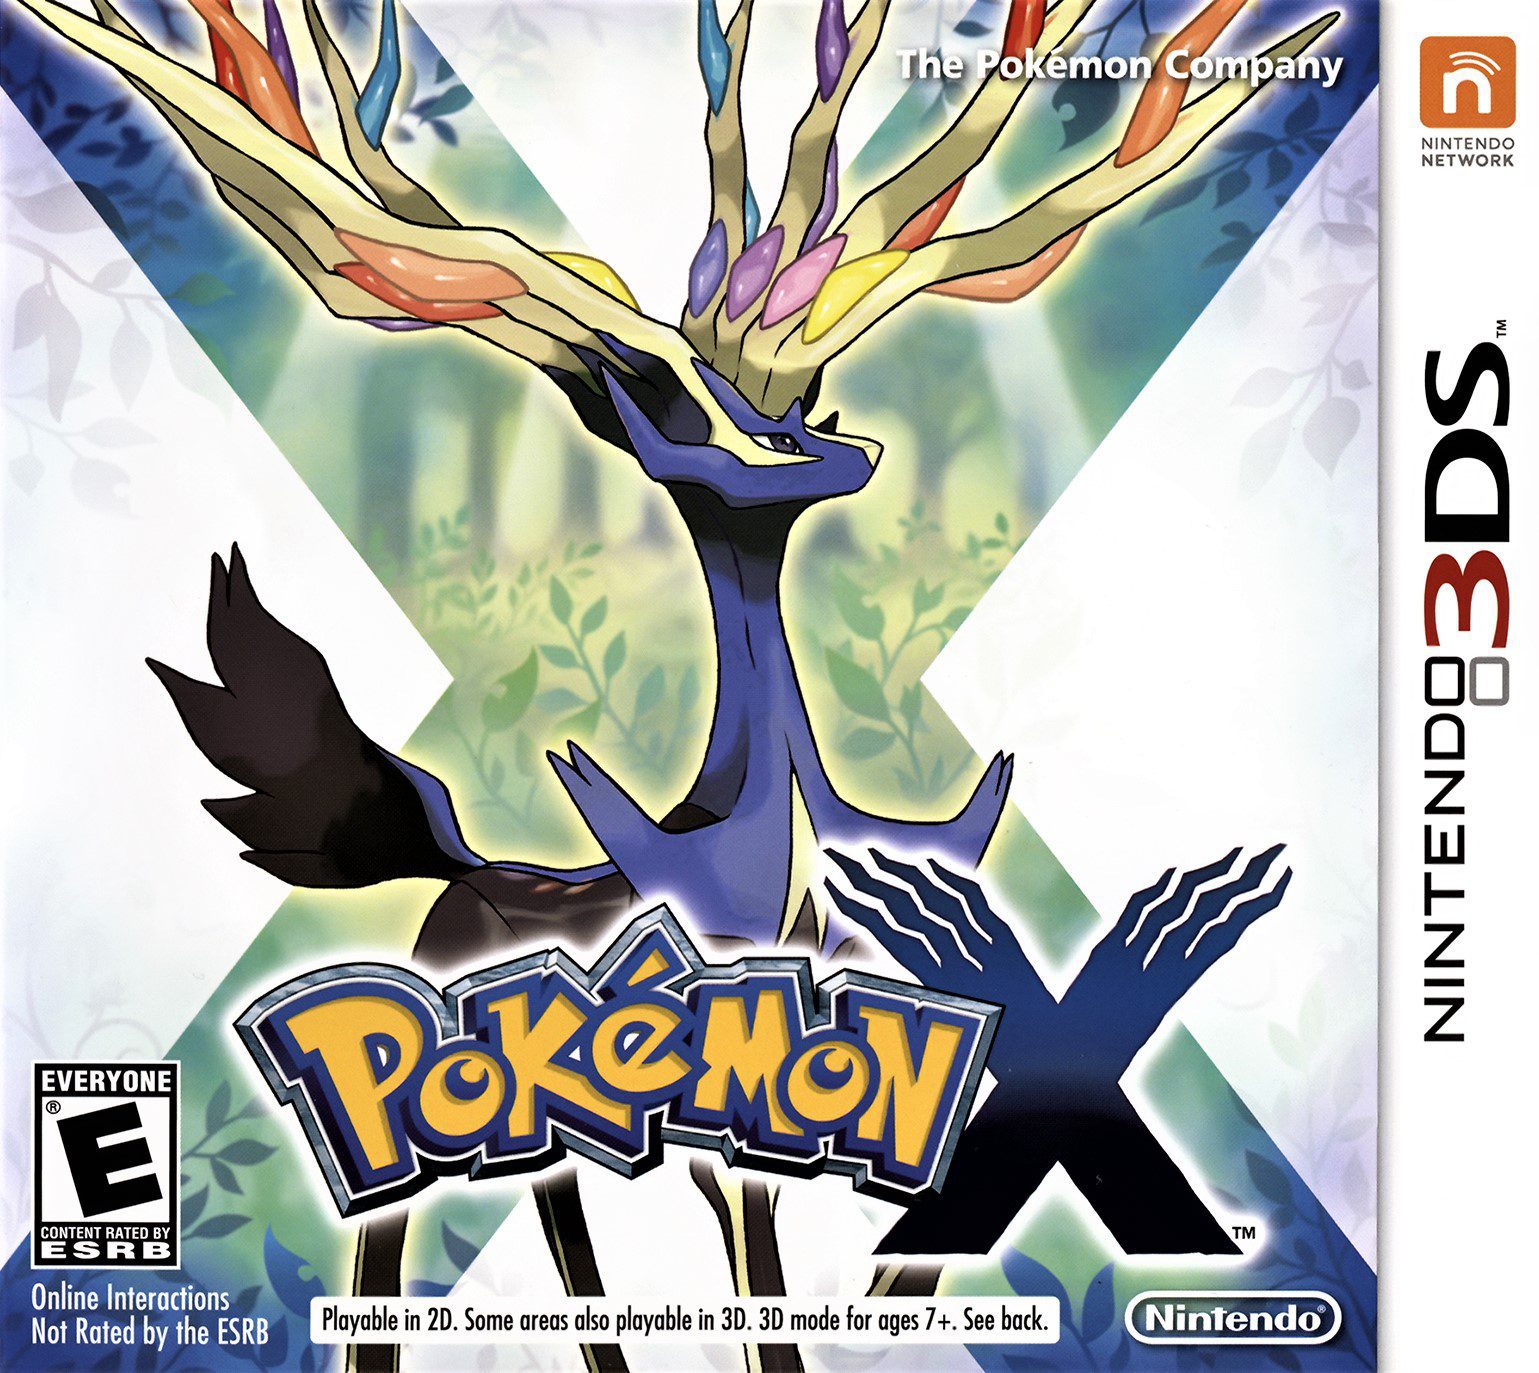 Pokémon X for Nintendo 3DS